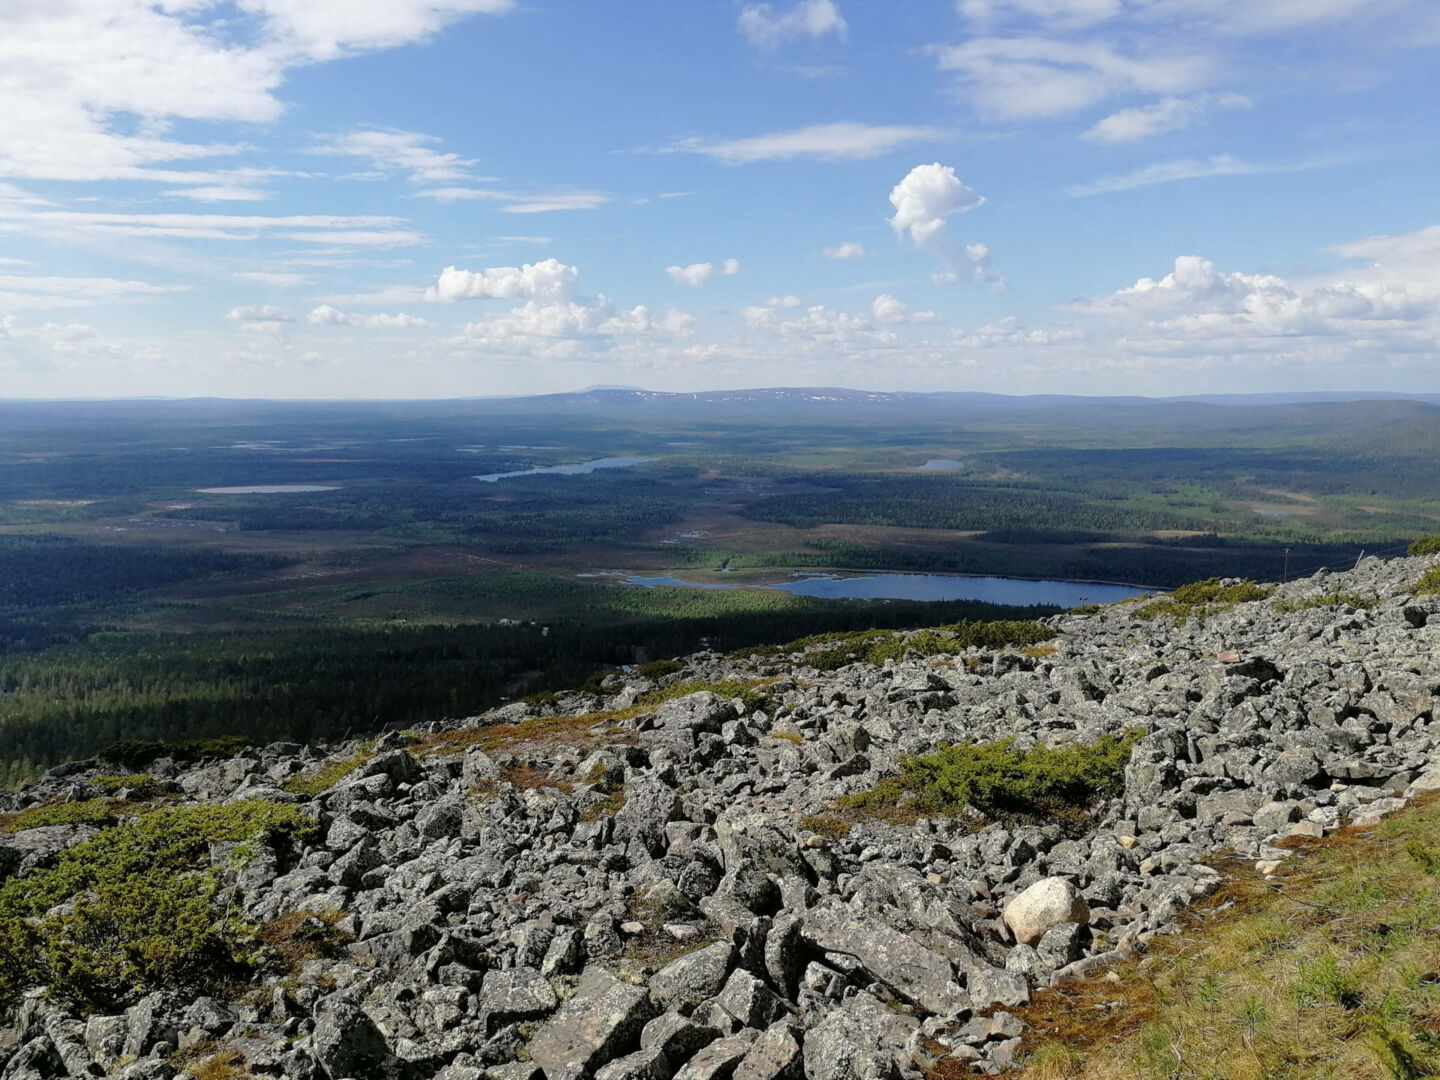 Stone fields film location in Finnish Lapland, Europe's last wilderness